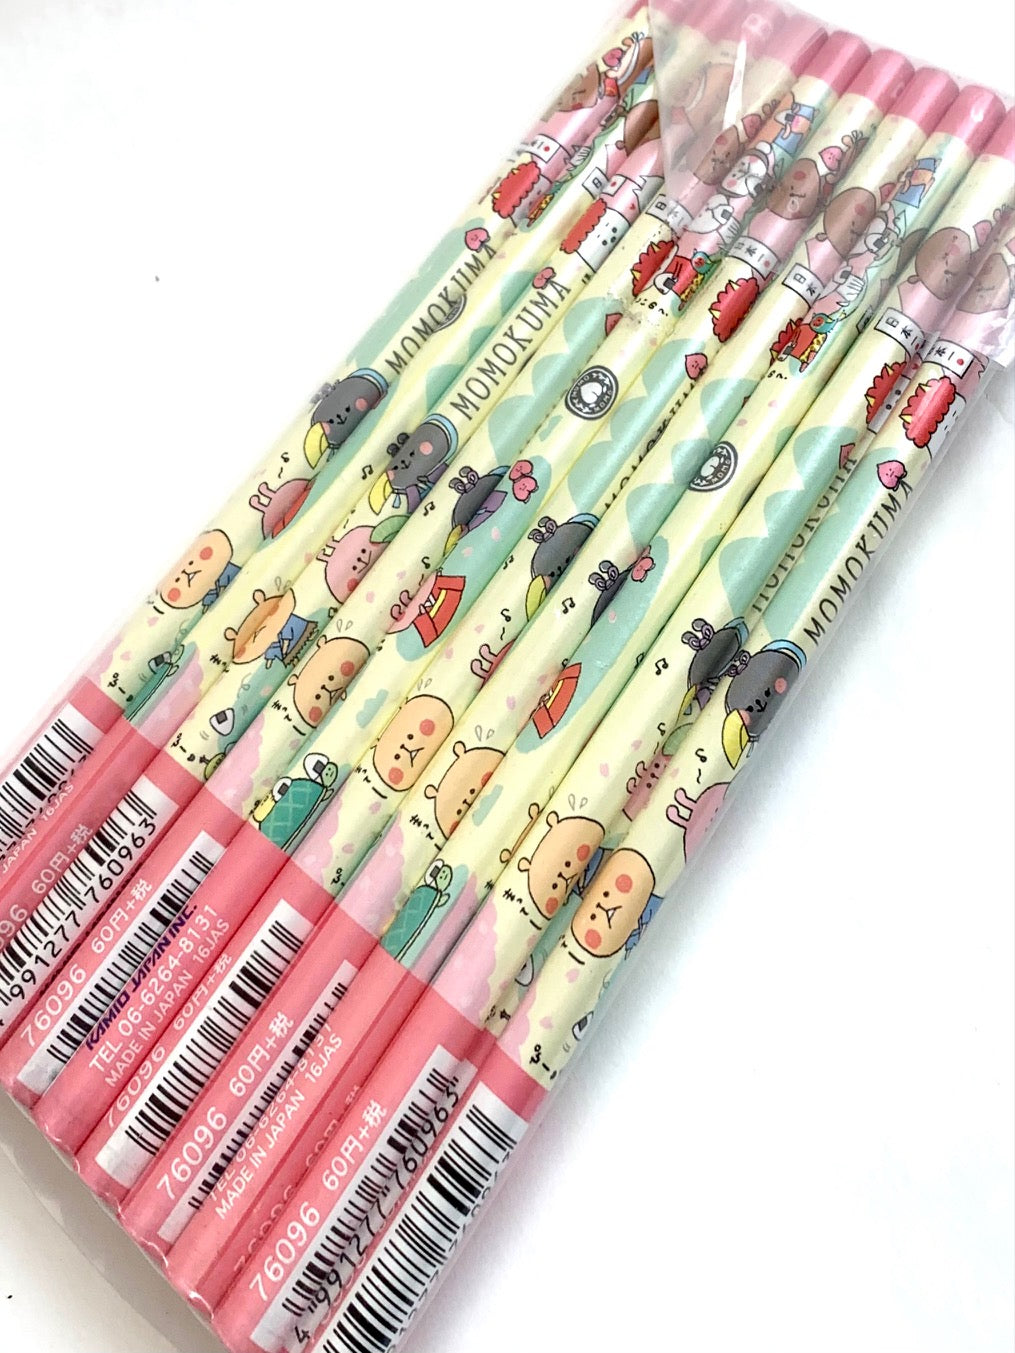 X 21233 Kamio Monokuma B pencils-DISCONTINUED